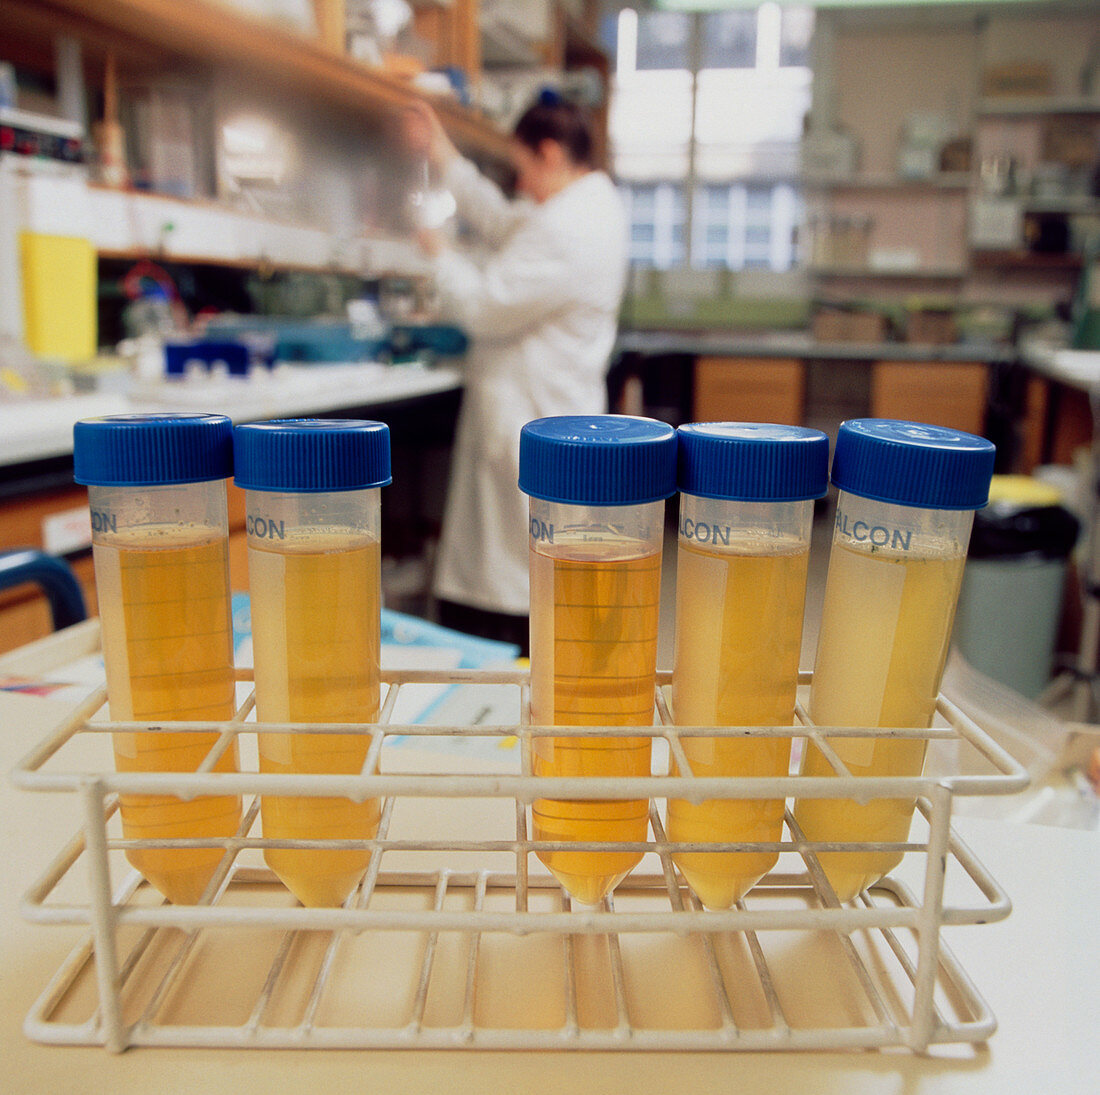 Faecal samples for bowel cancer DNA screening